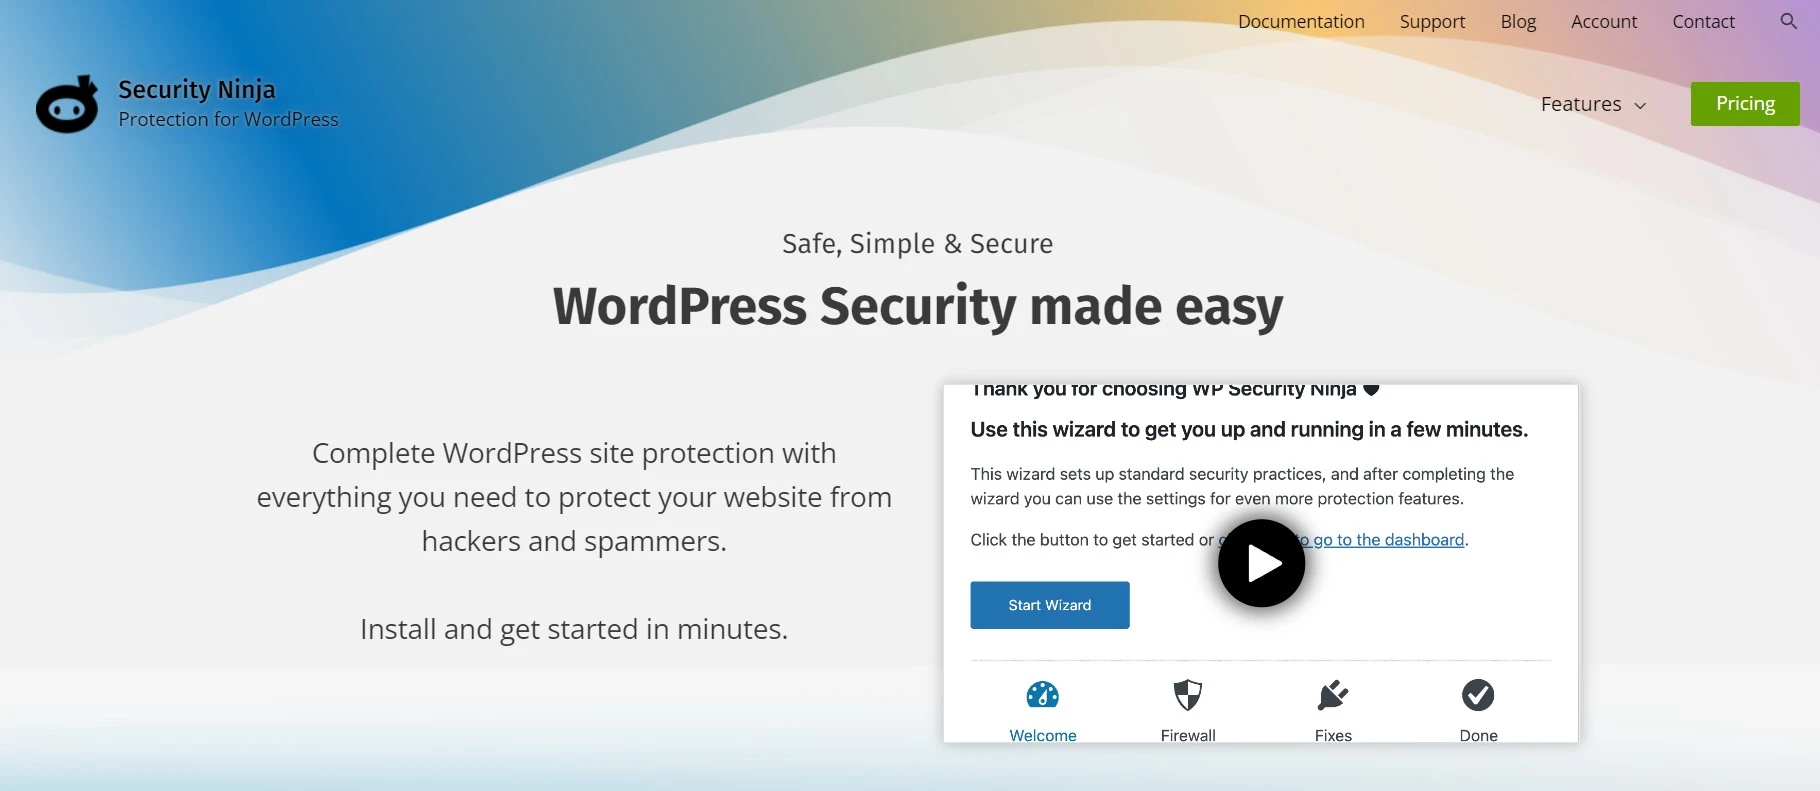 Security Ninja Easy To Use Wordpress Security Plugin